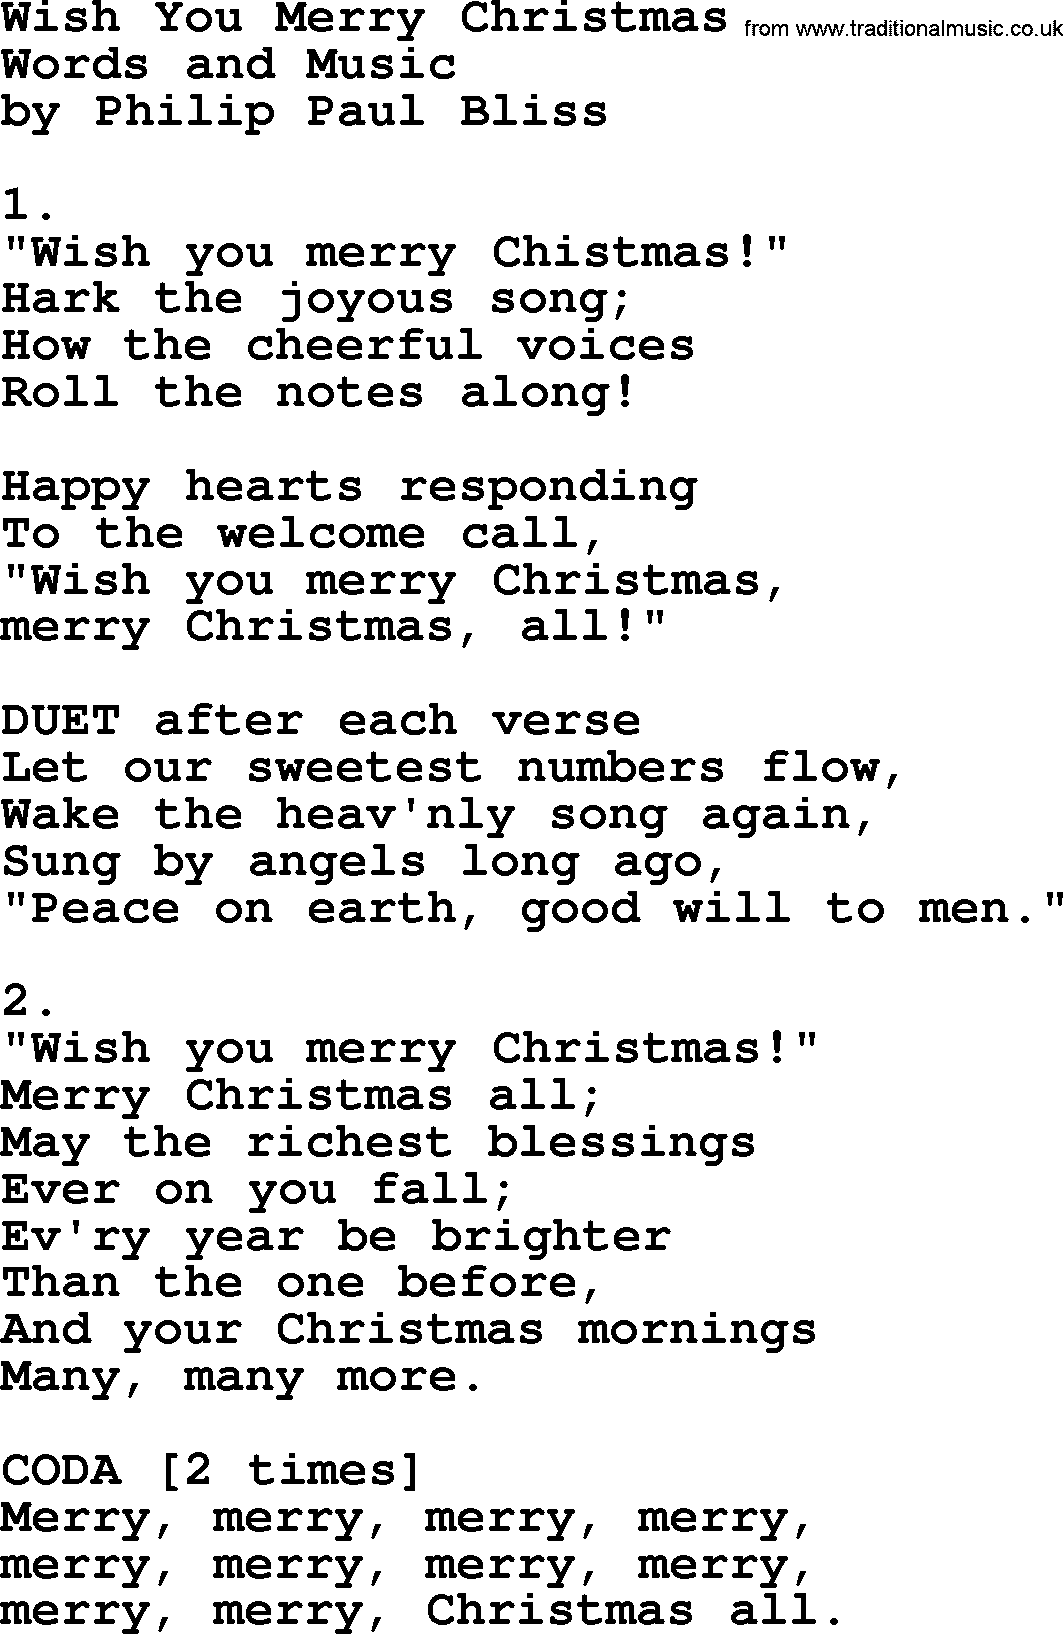 Philip Bliss Song: Wish You Merry Christmas, lyrics